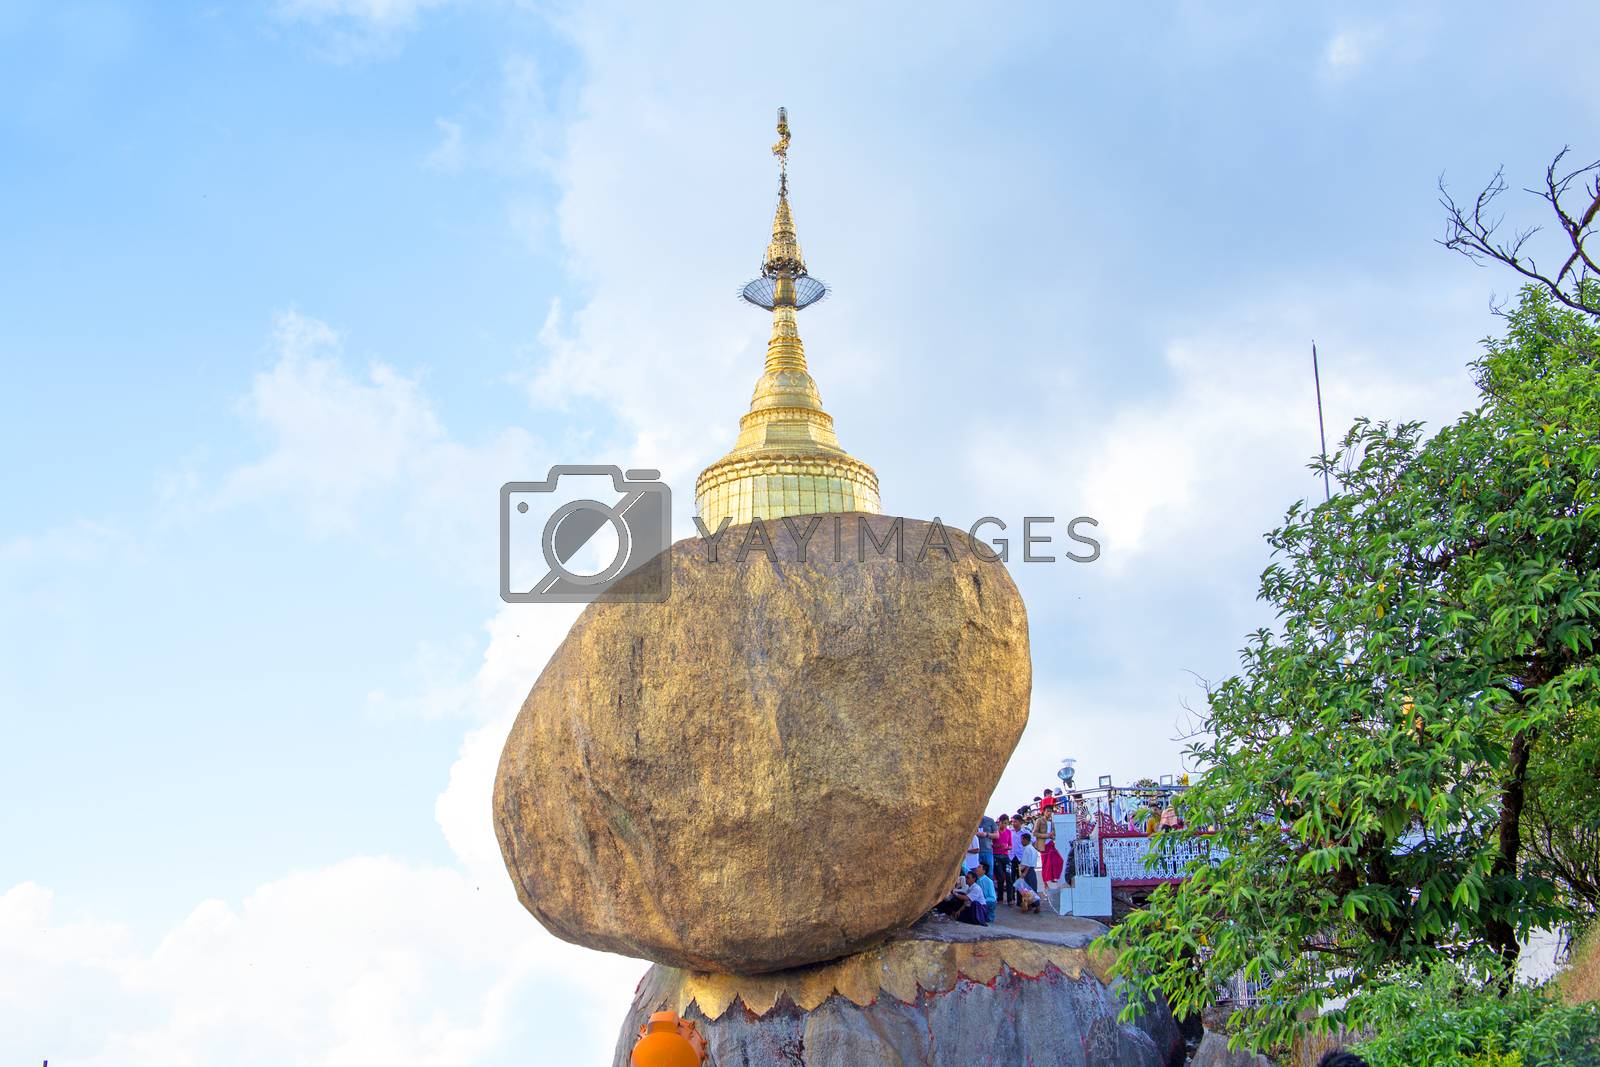 Royalty free image of Kyaiktiyo Pagoda, Mon State, Myanmar (Burma) by devy